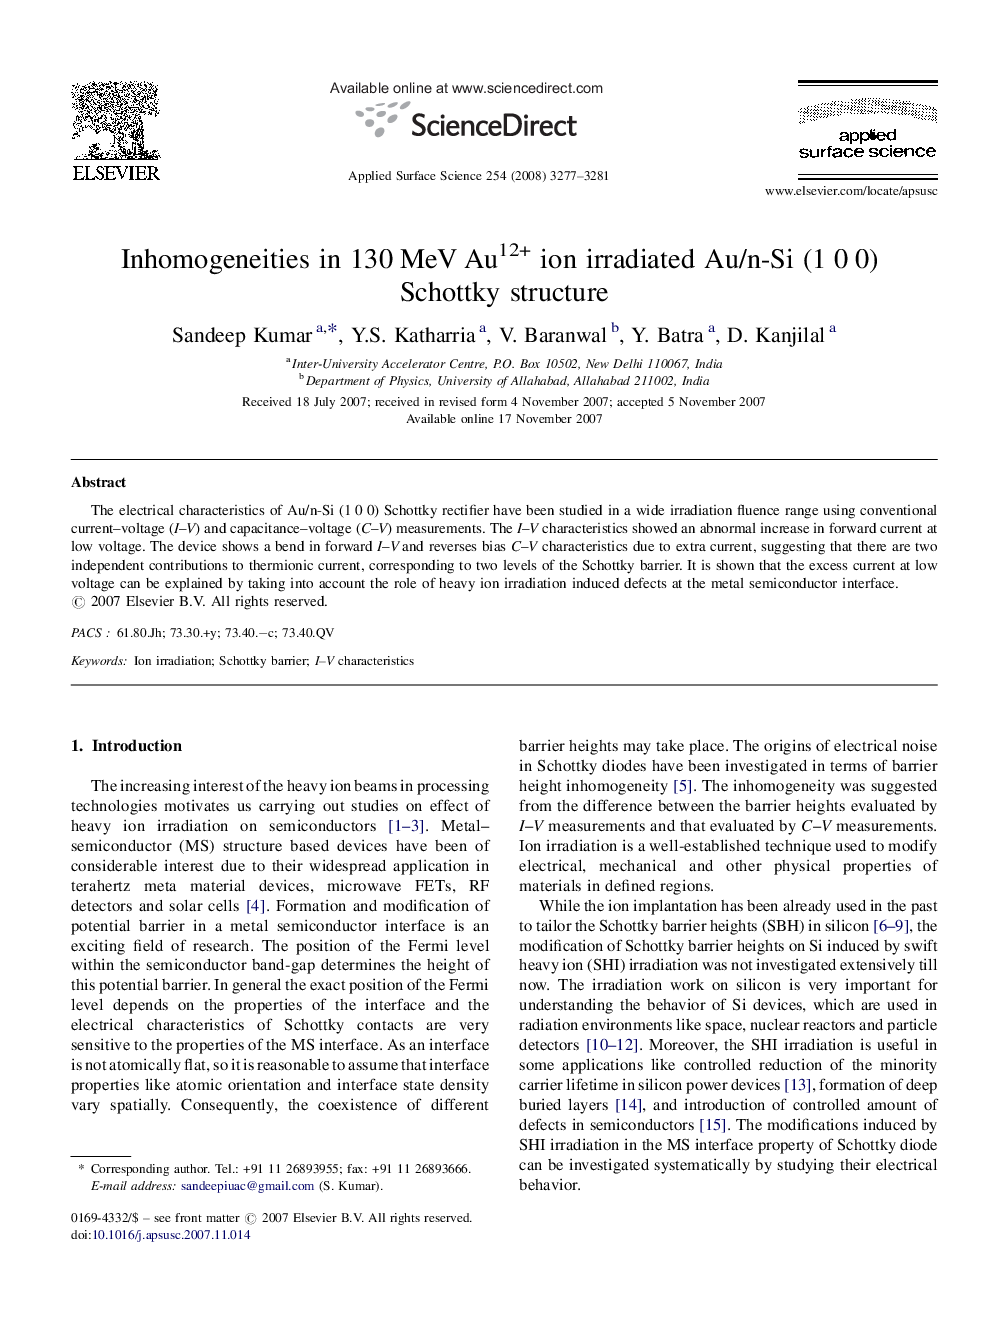 Inhomogeneities in 130Â MeV Au12+ ion irradiated Au/n-Si (1Â 0Â 0) Schottky structure